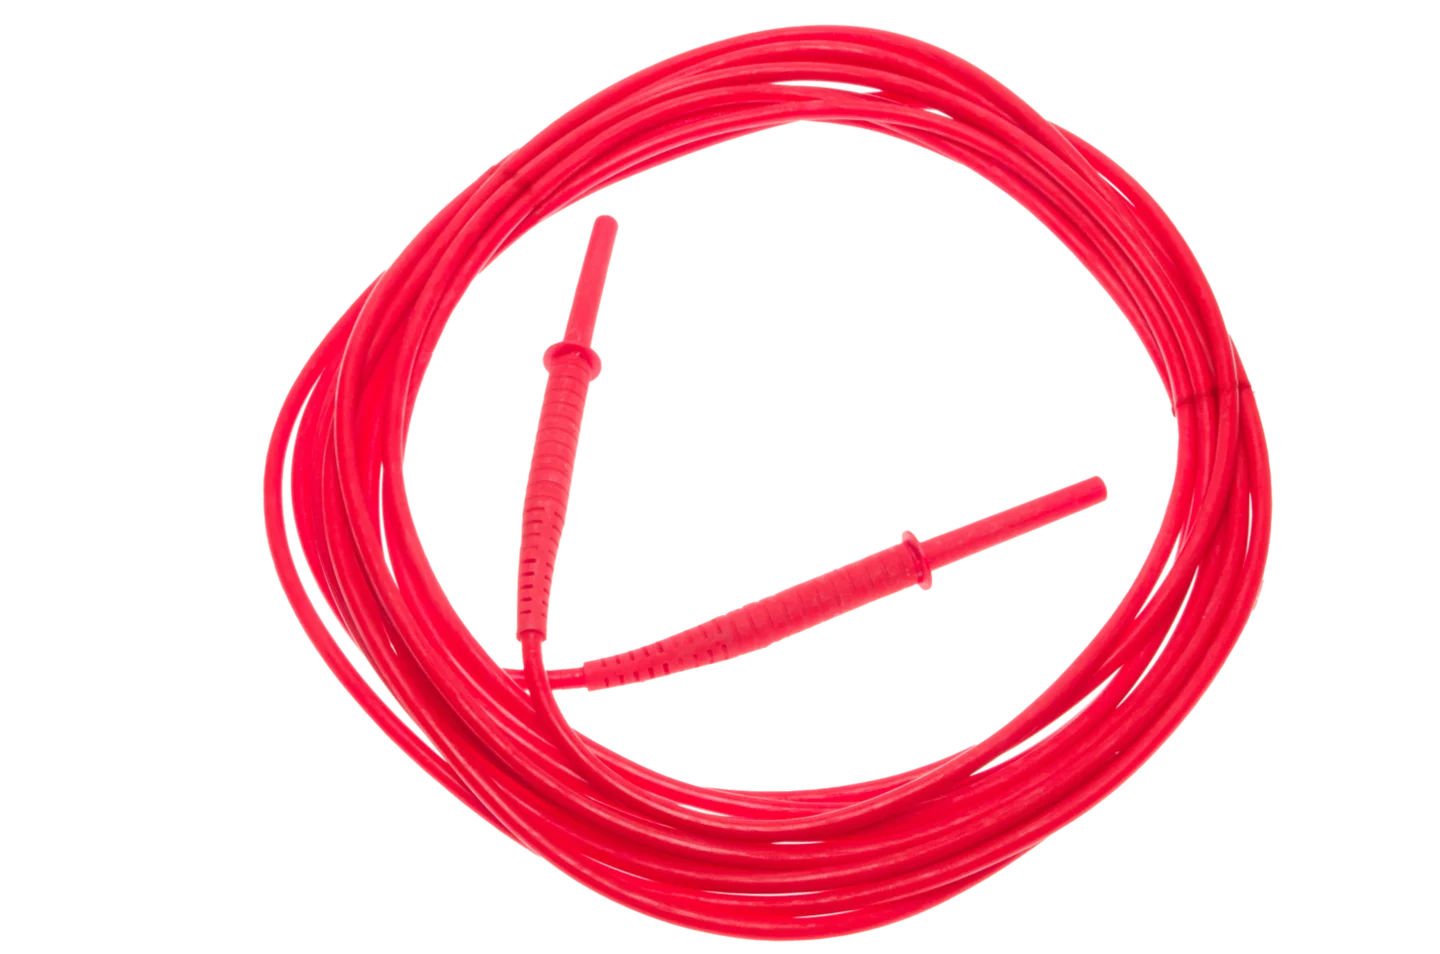 Test lead 10 m 11 kV (banana plugs) red